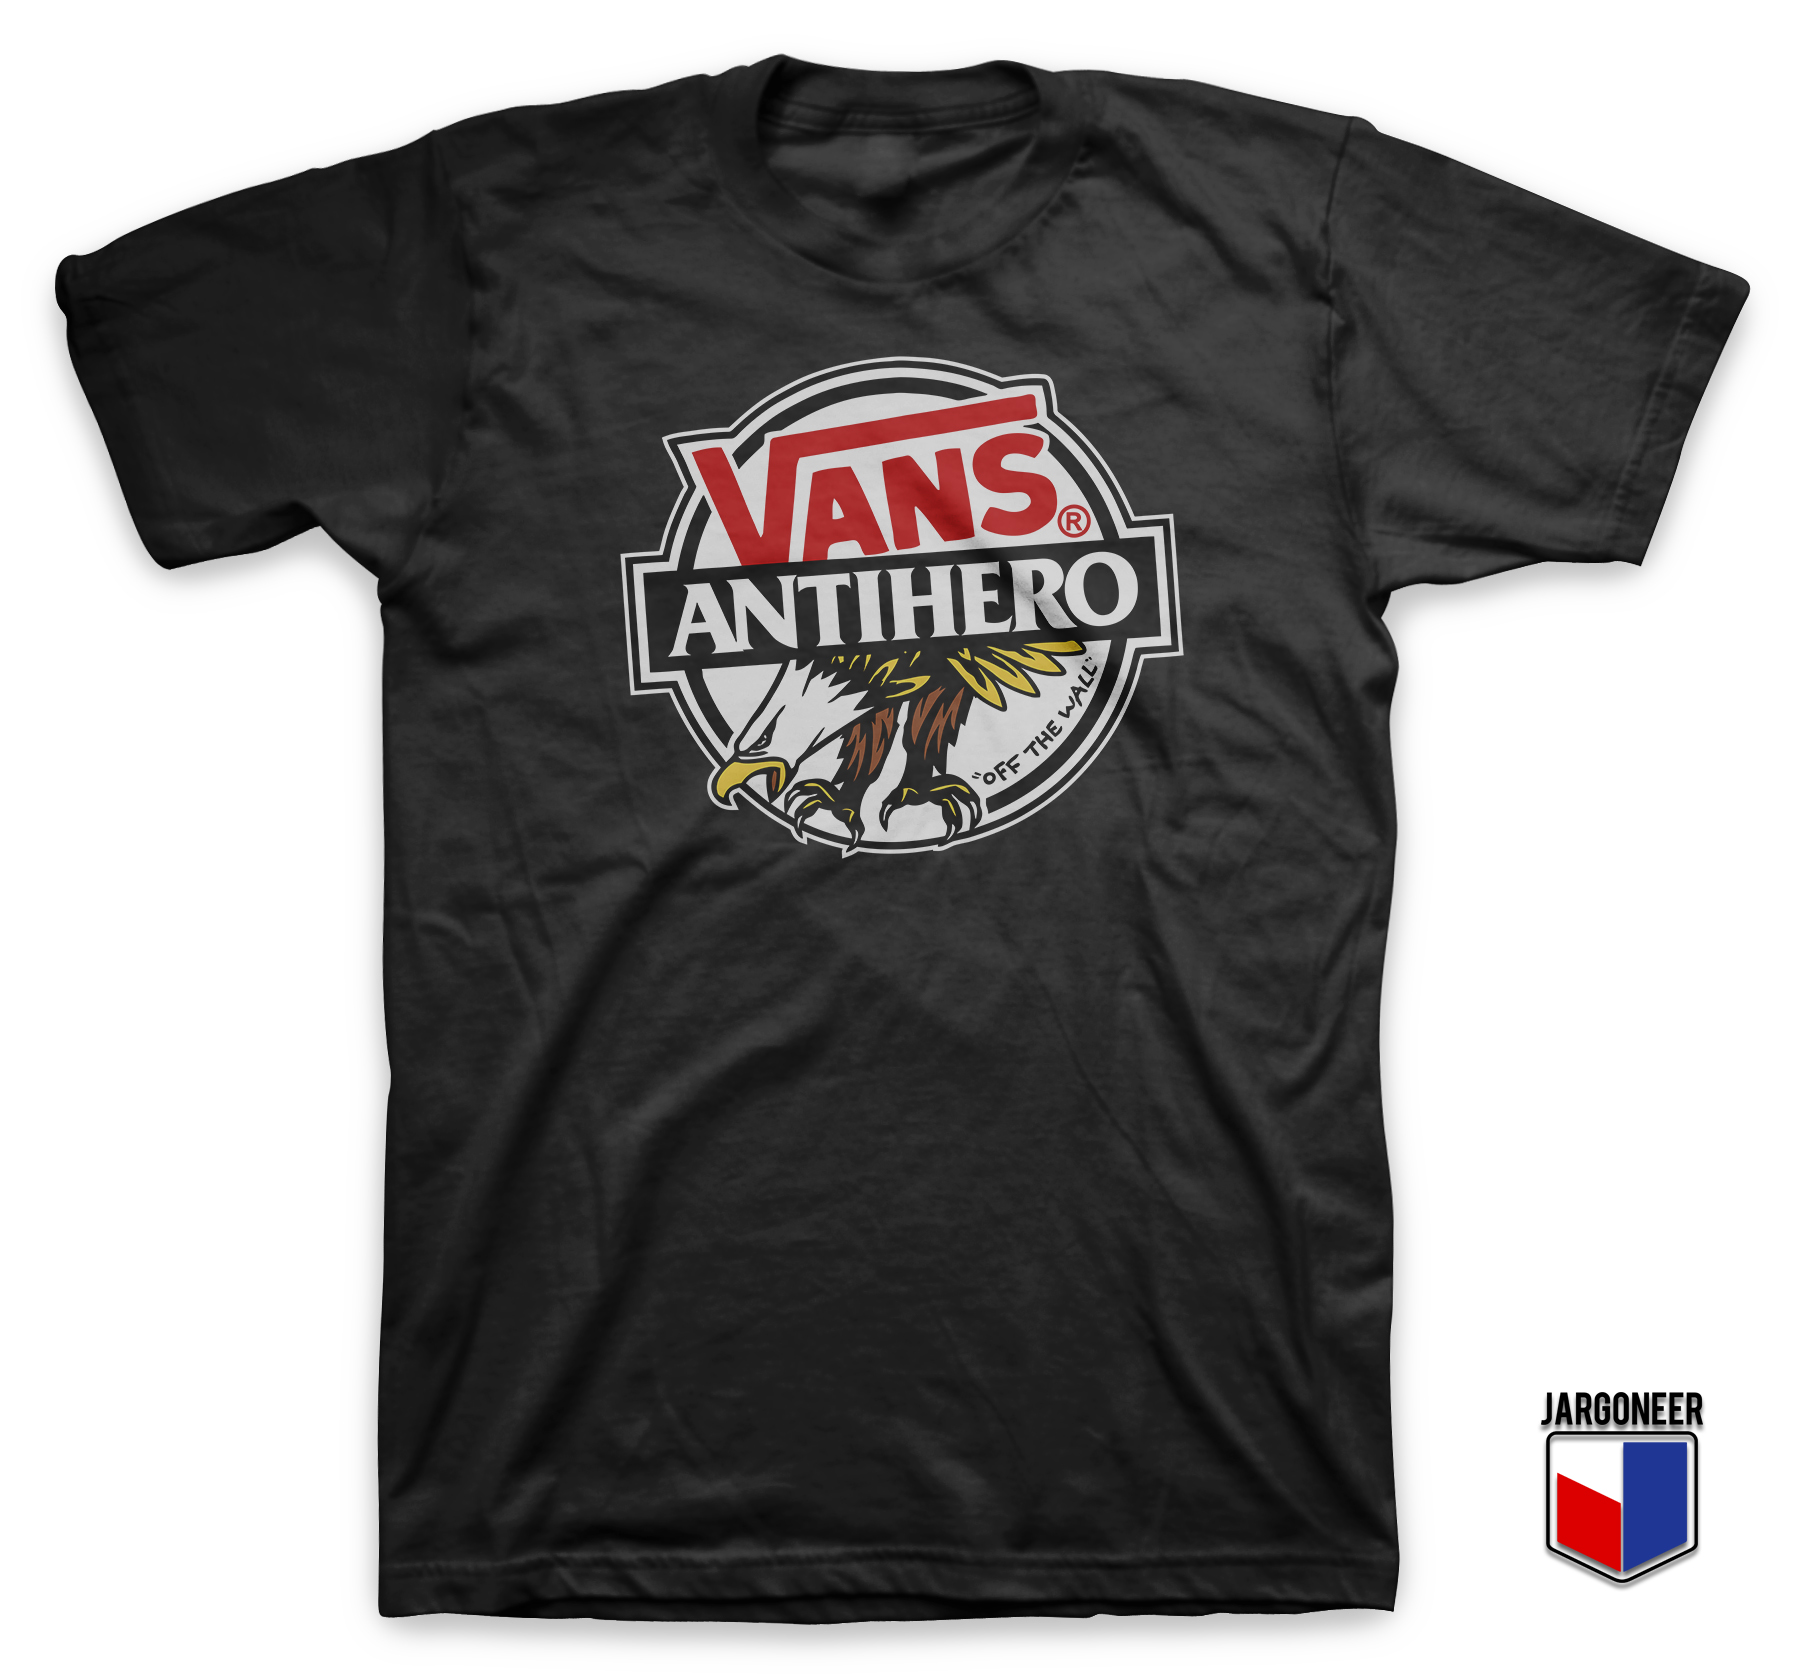 Vans X Antihero Black TShirt - Shop Unique Graphic Cool Shirt Designs